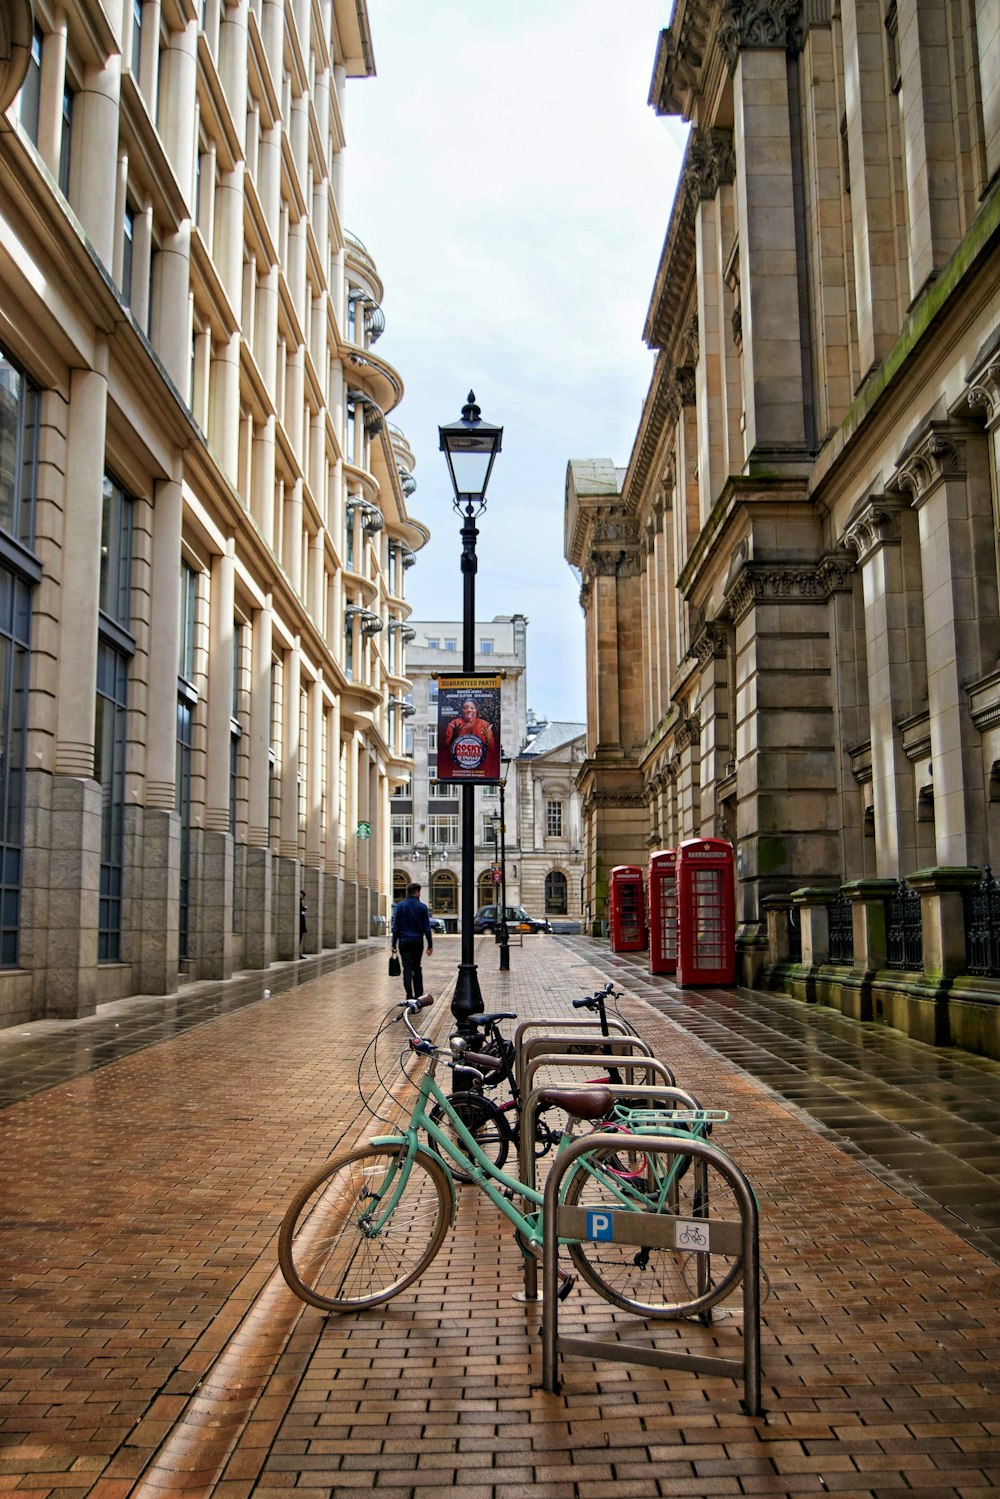 teal commuter bike parked beside buildings